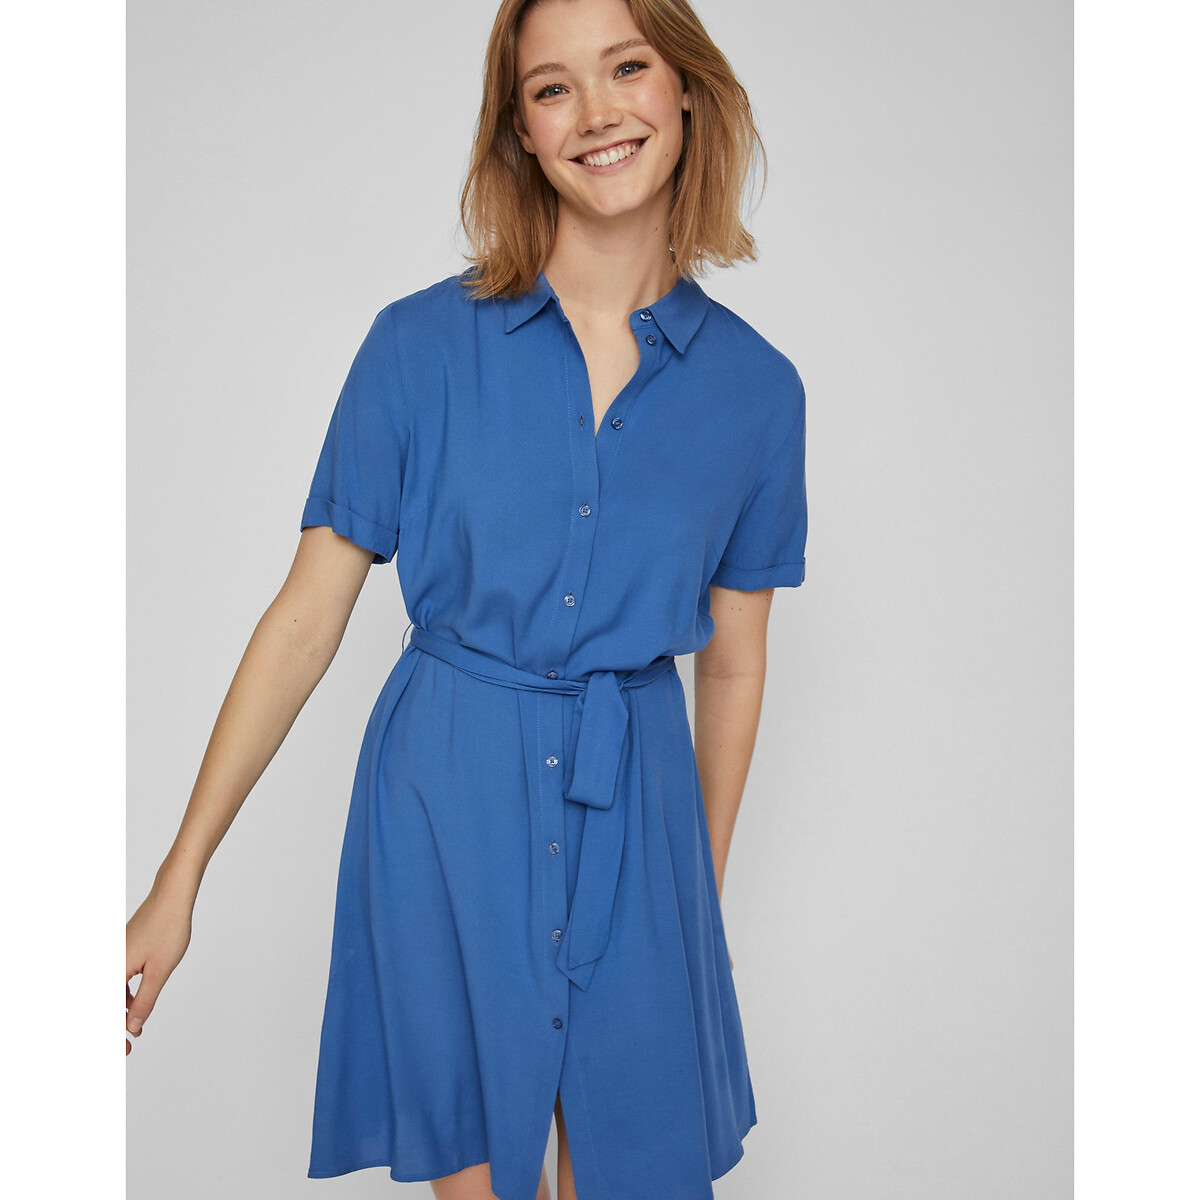 Платье-рубашка Короткие рукава с завязками 46 синий LaRedoute, размер 46 - фото 2